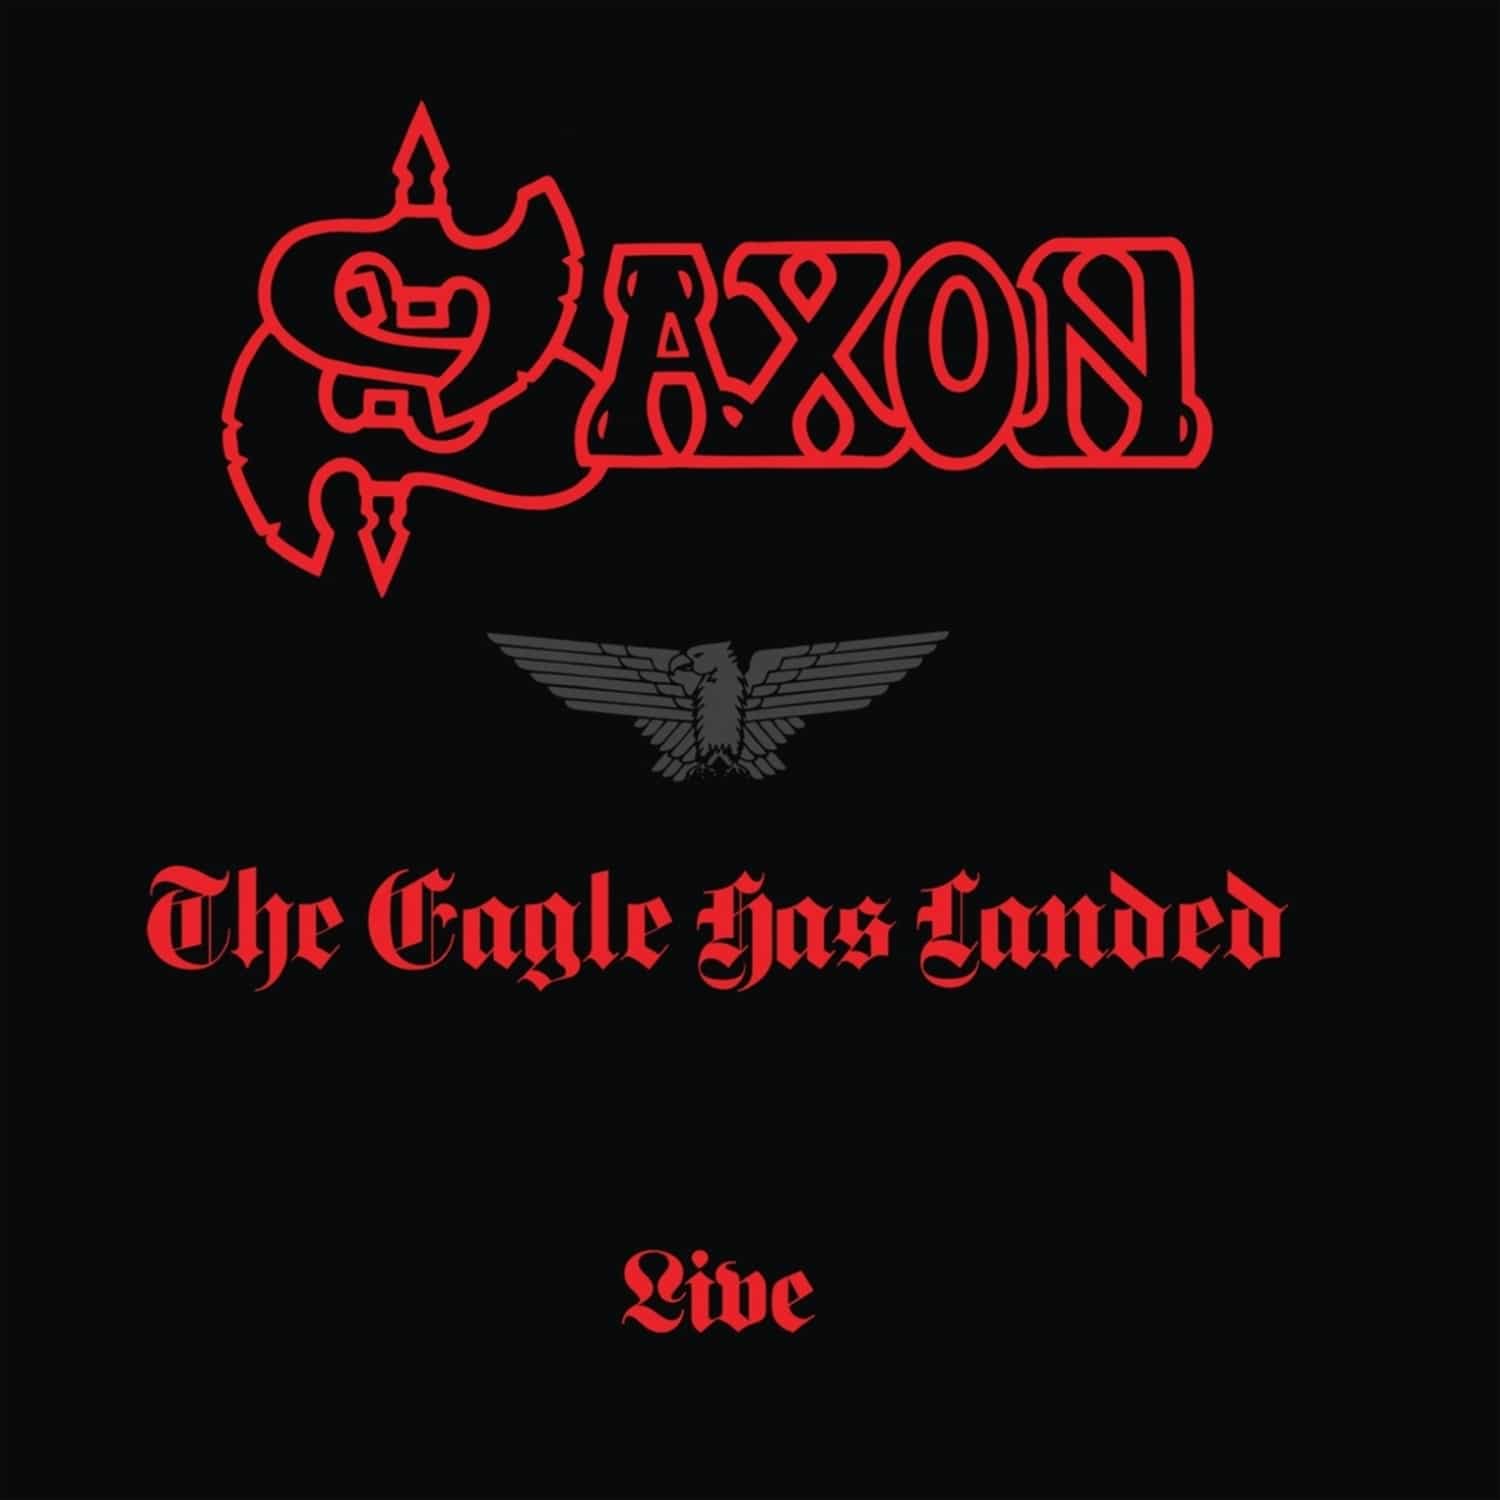 Saxon - THE EAGLE HAS LANDED 